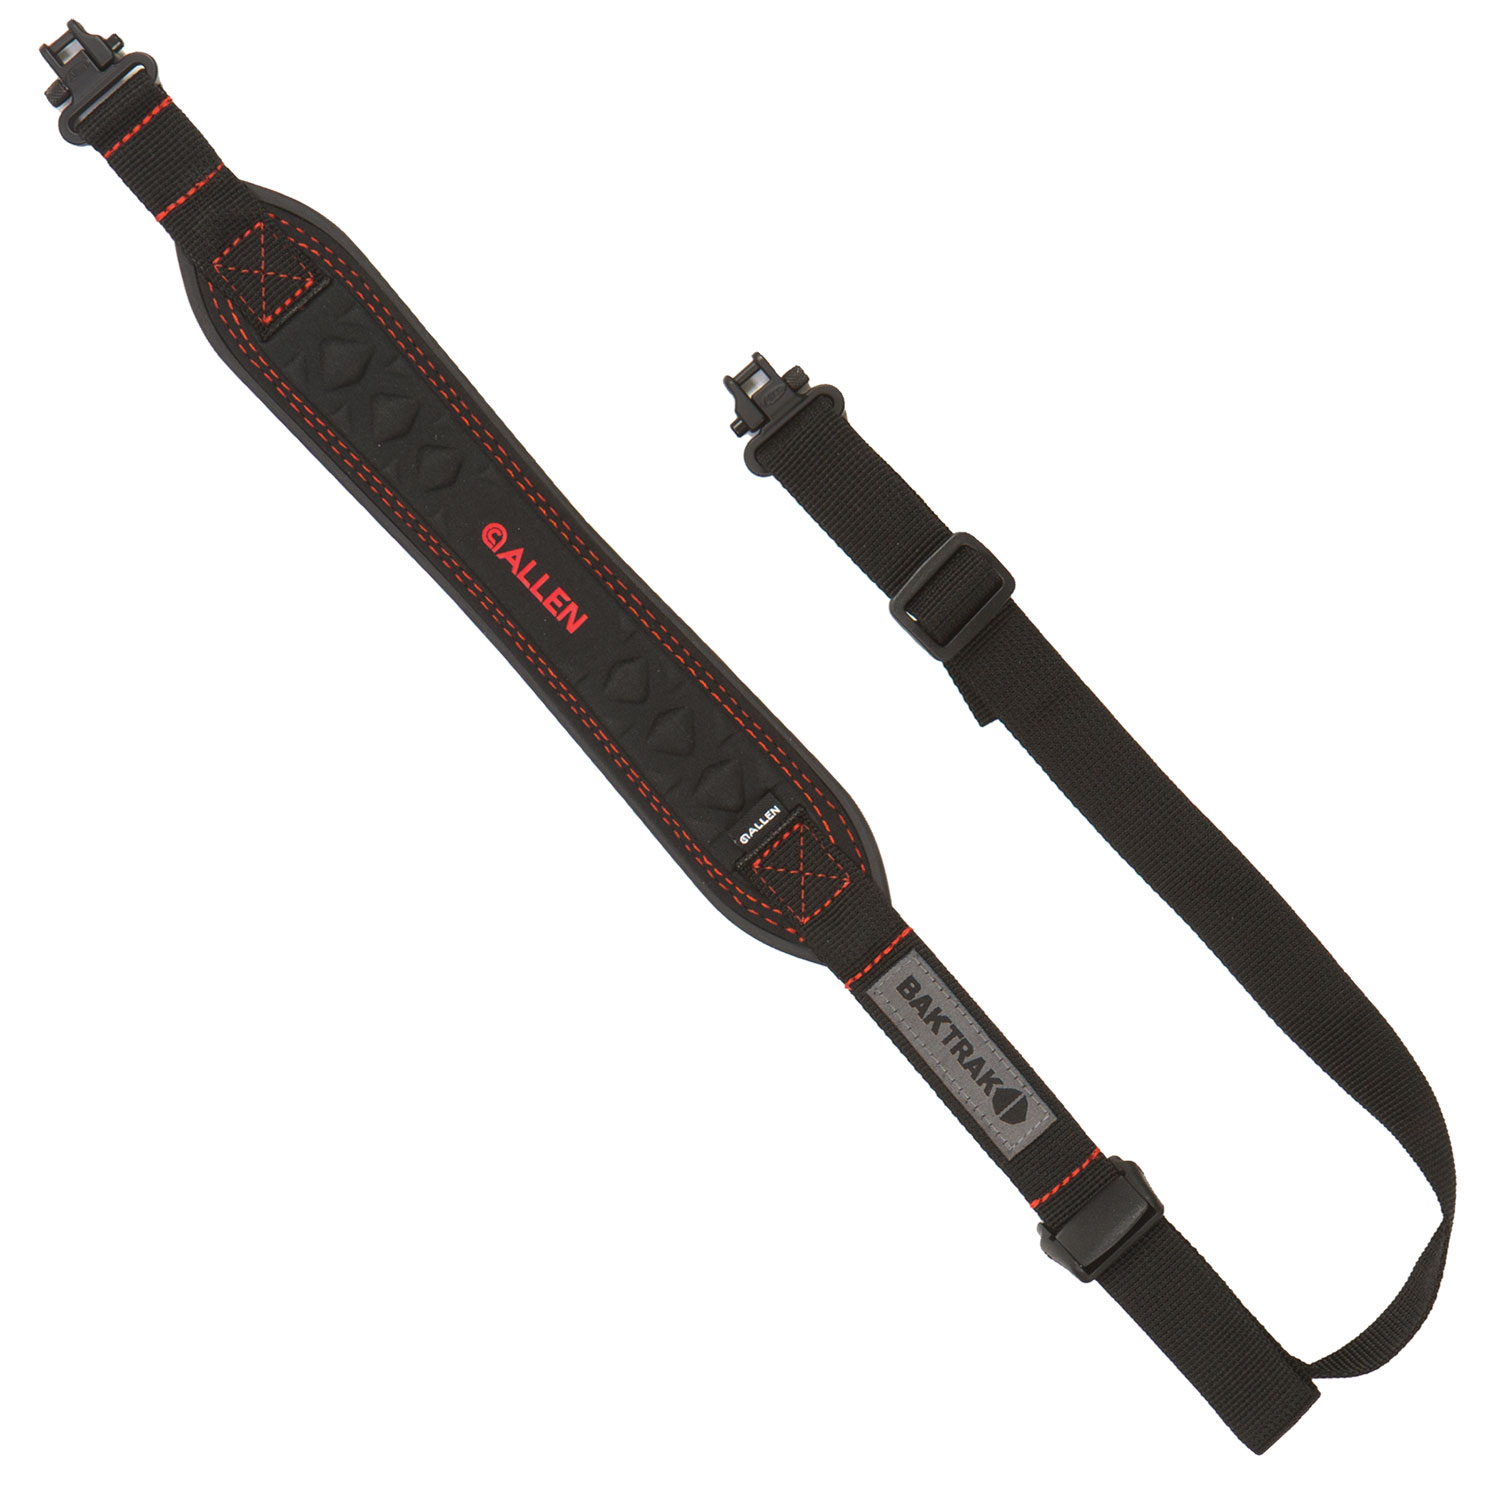 Allen 8375 Vapor Sling made of Black with Red Accents Nylon Webbing & BakTrak Back with Adjustable Design & Swivels for Rifles